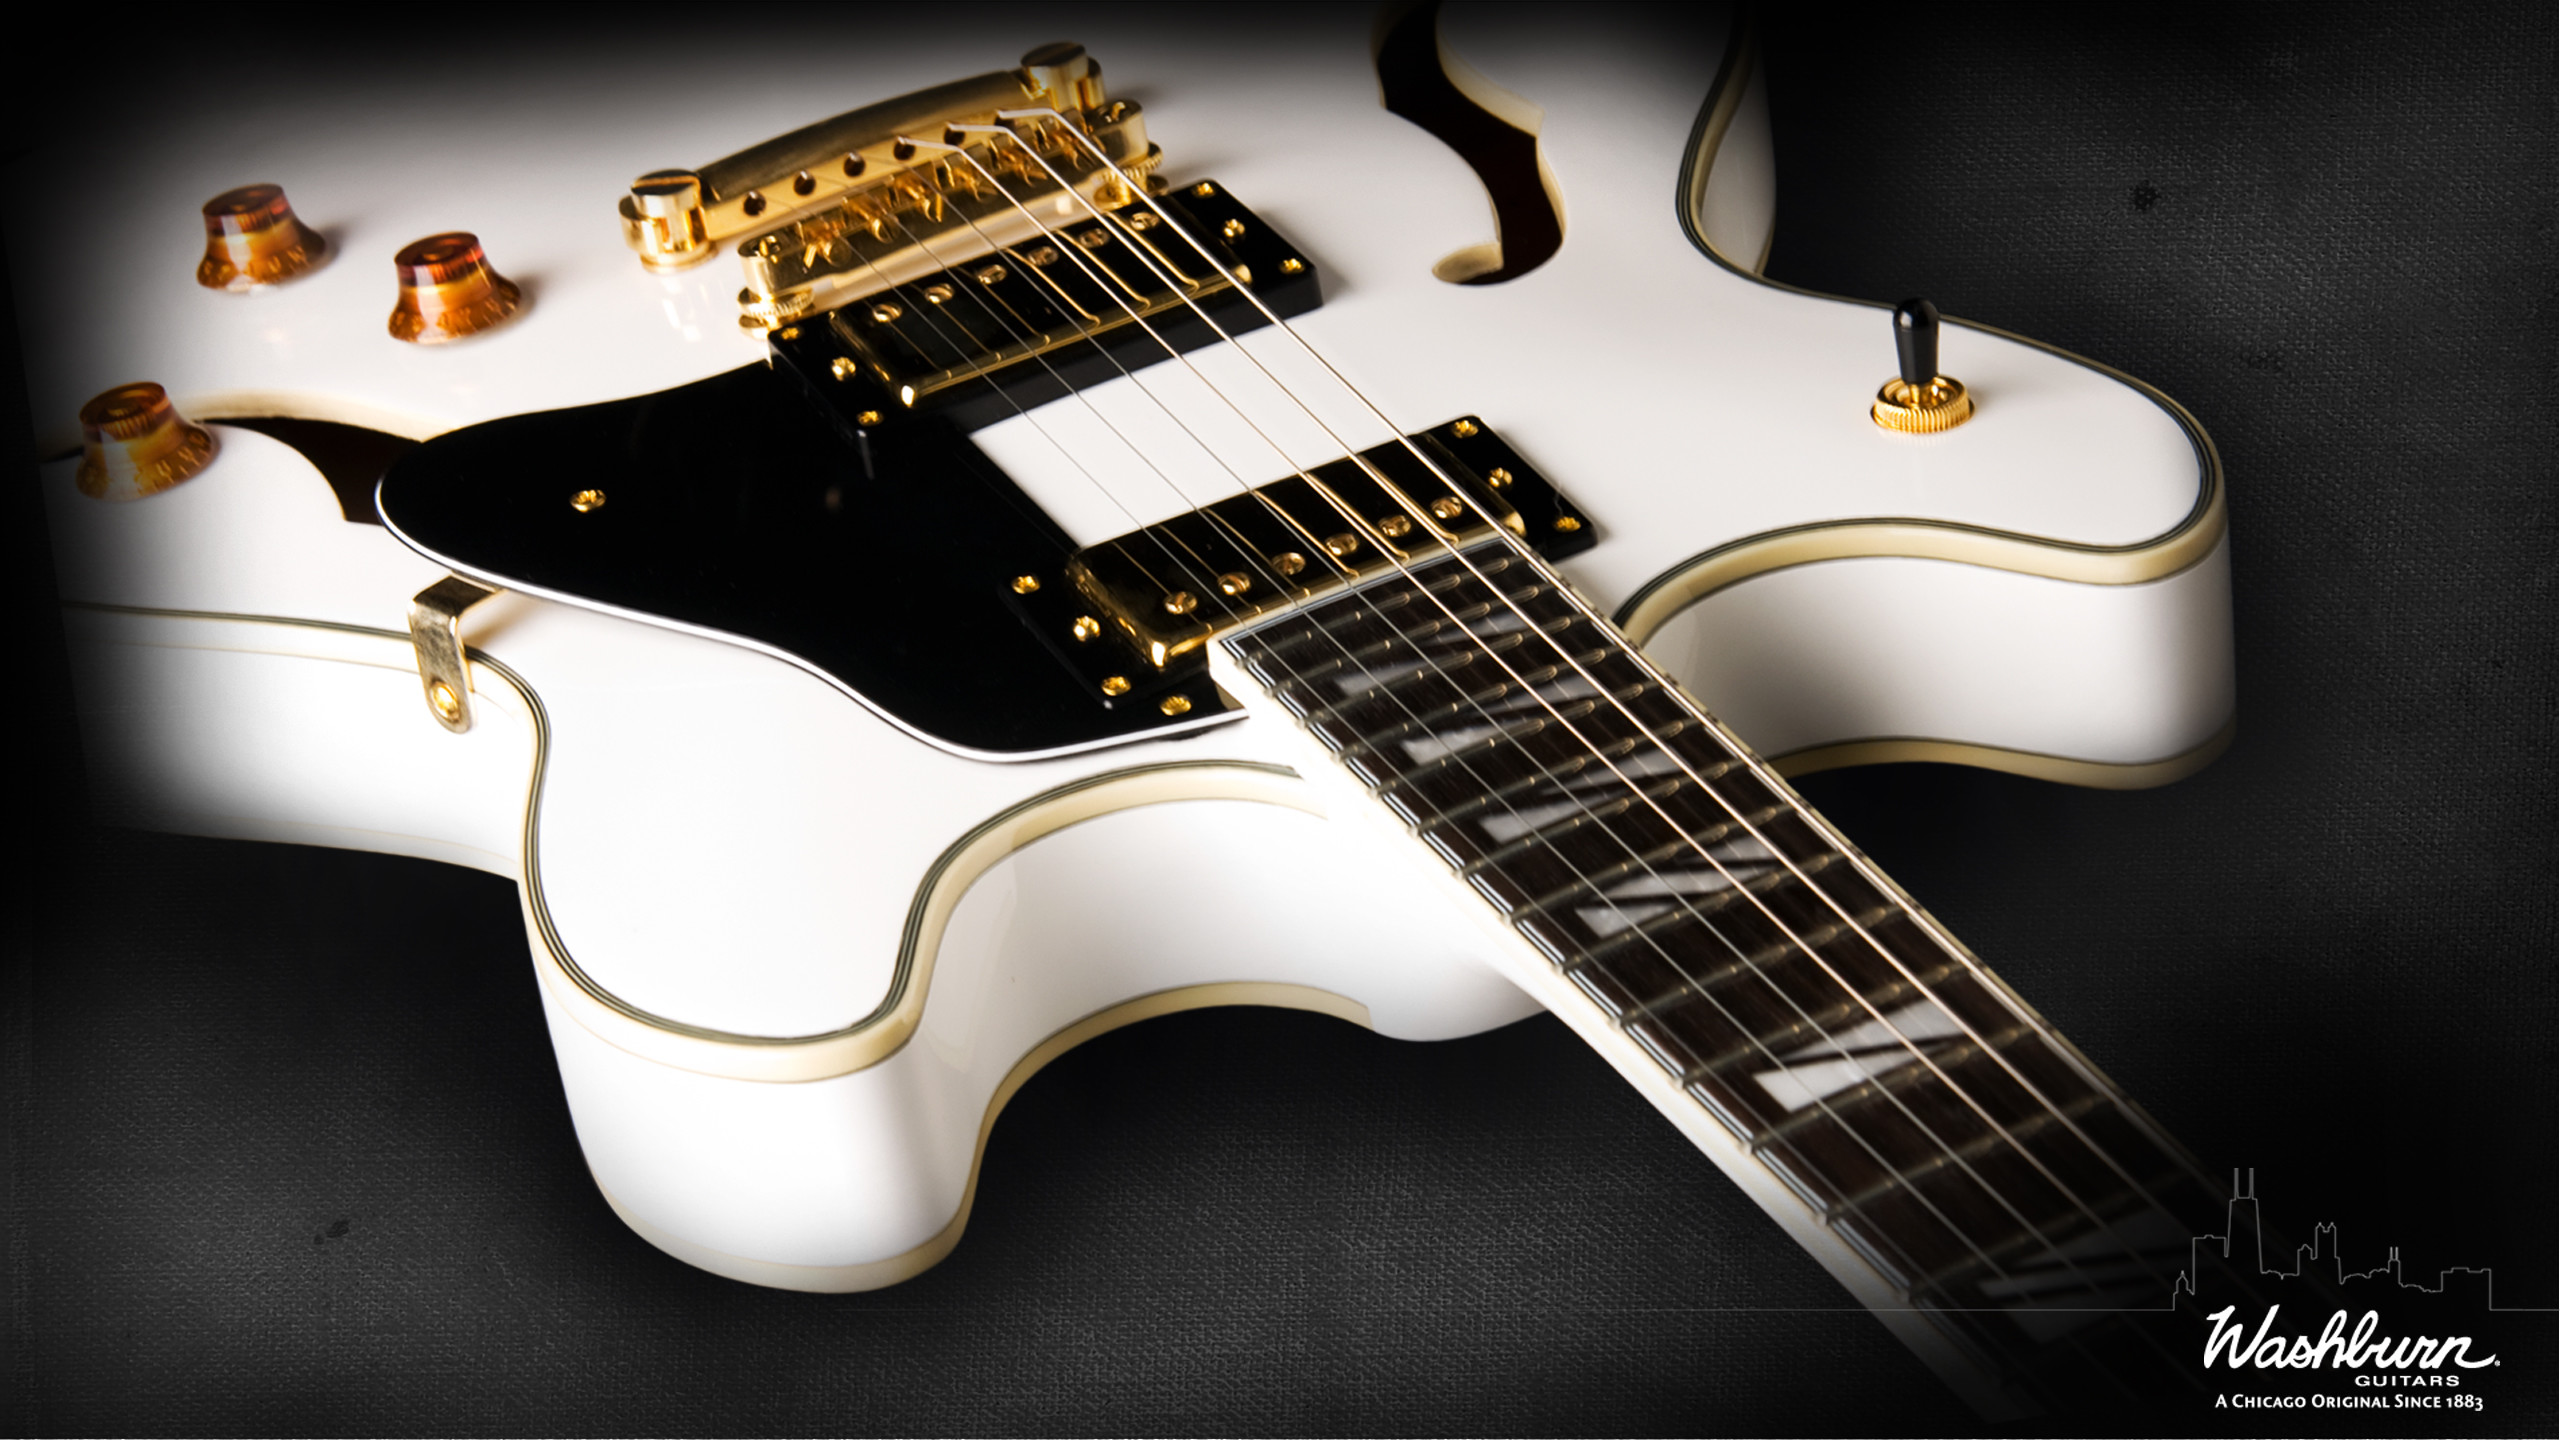 2560x1440 Washburn Guitars Wallpaper